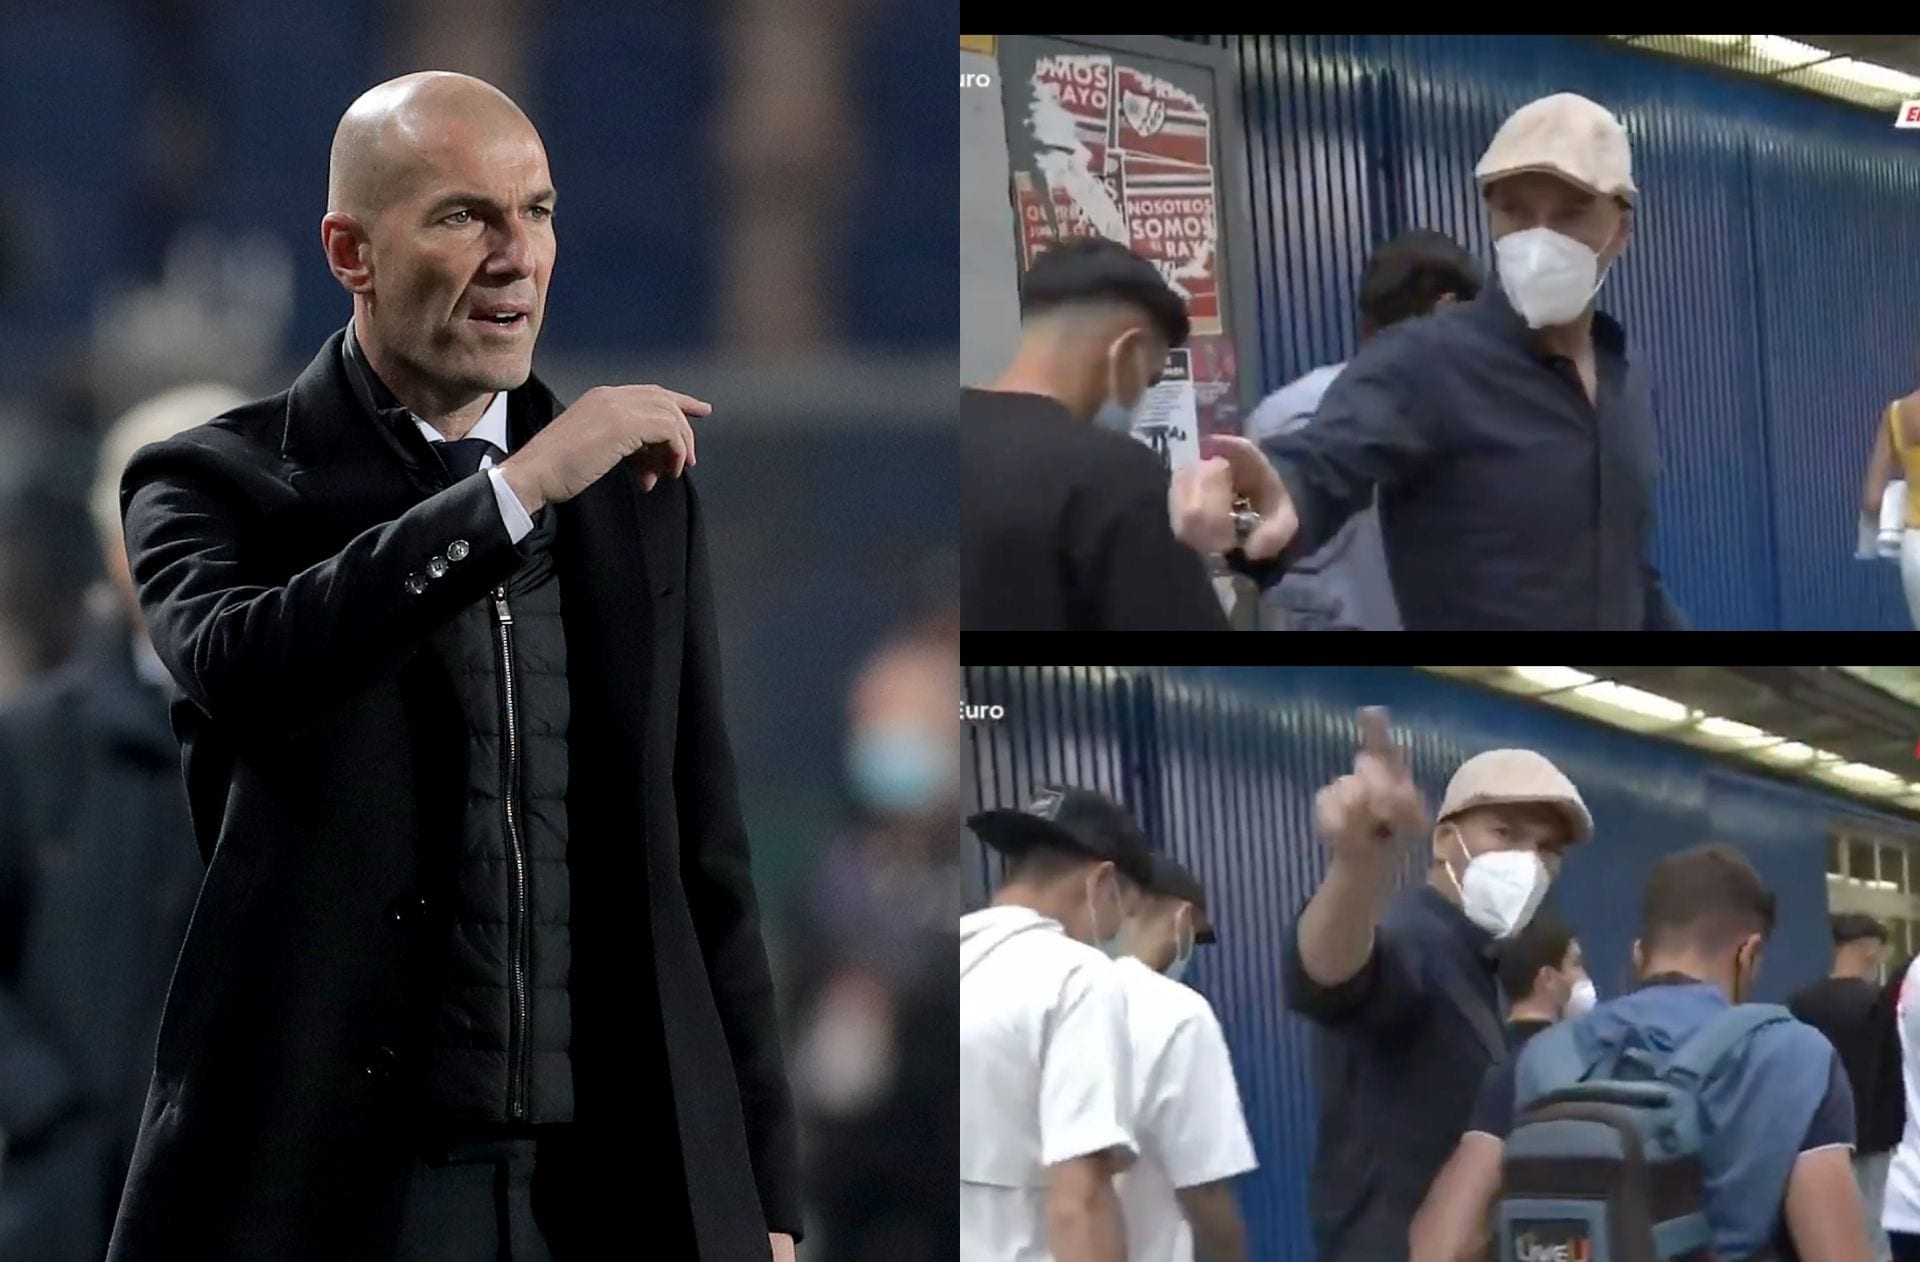 Zinedine Zidane, Real Madrid